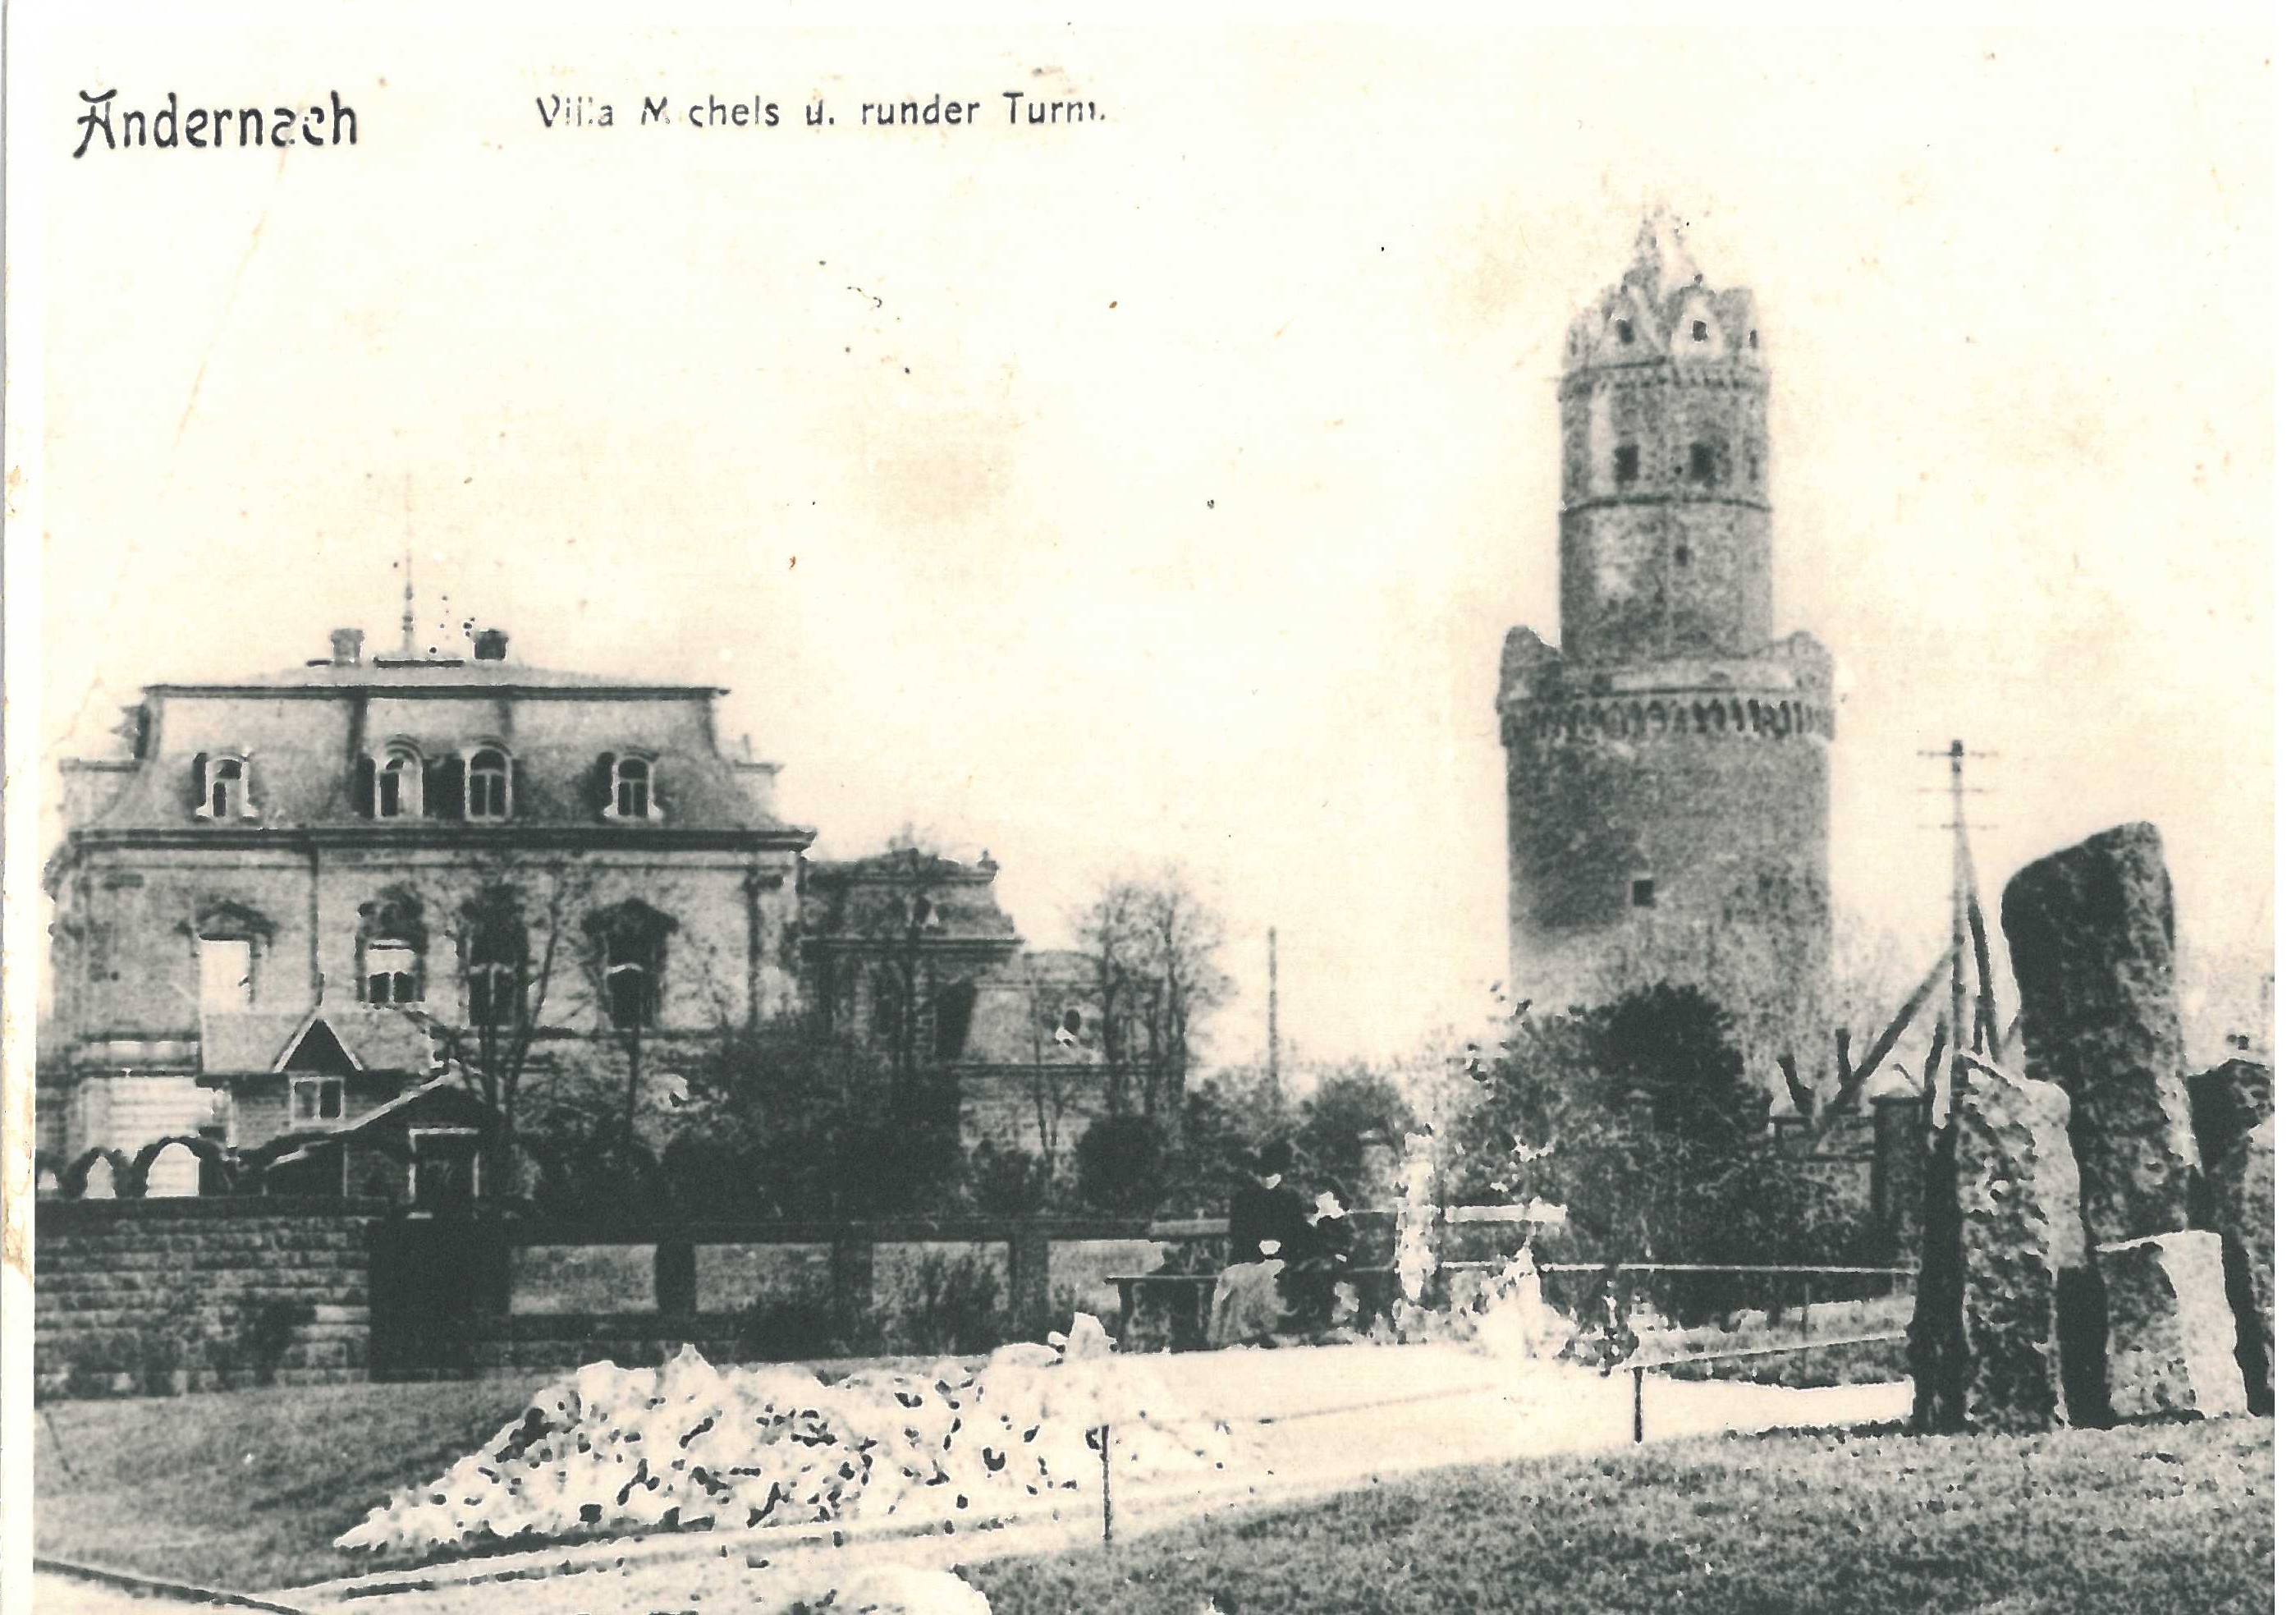 Postkarte mit Abbildung des Runden Turms mit Villa Michels (Stadtmuseum Andernach CC BY-NC-SA)